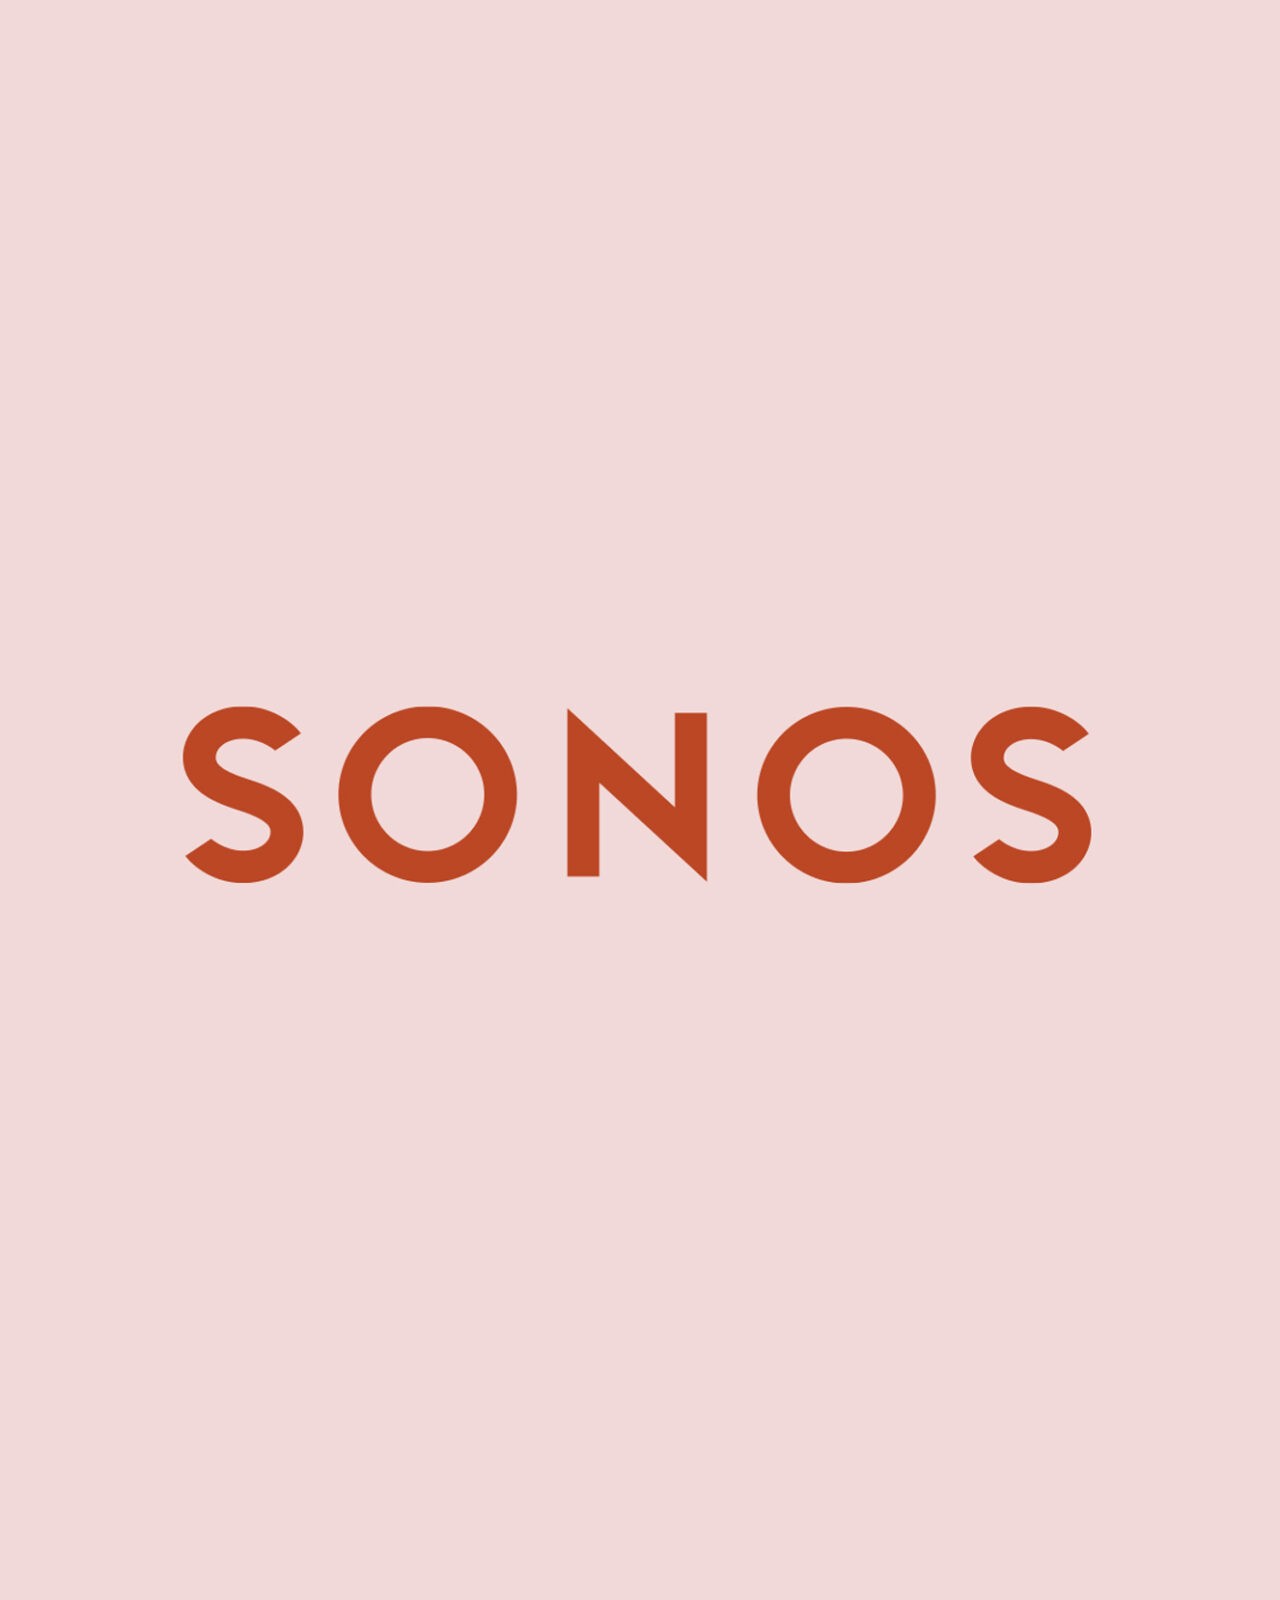 Sonos Identity